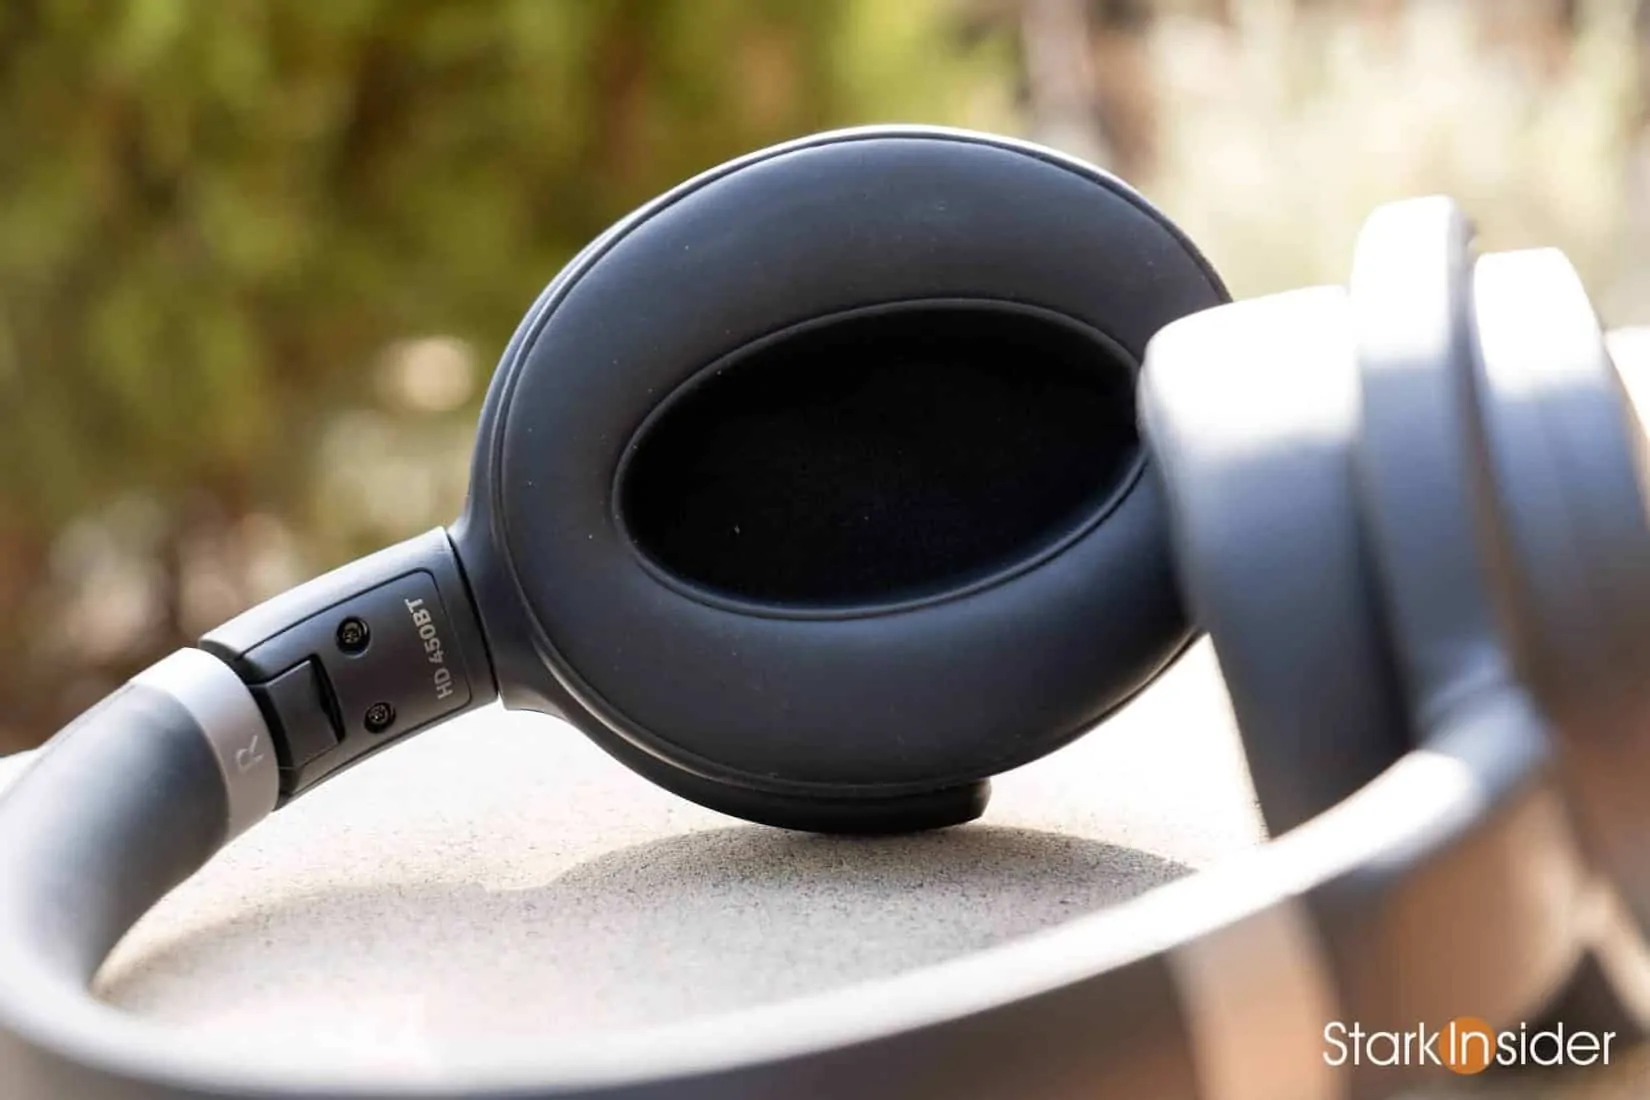 Sennheiser HD 450BT Wireless Over Ear Noise Cancelling Headphones with  Bluetooth 5.0 - Black 